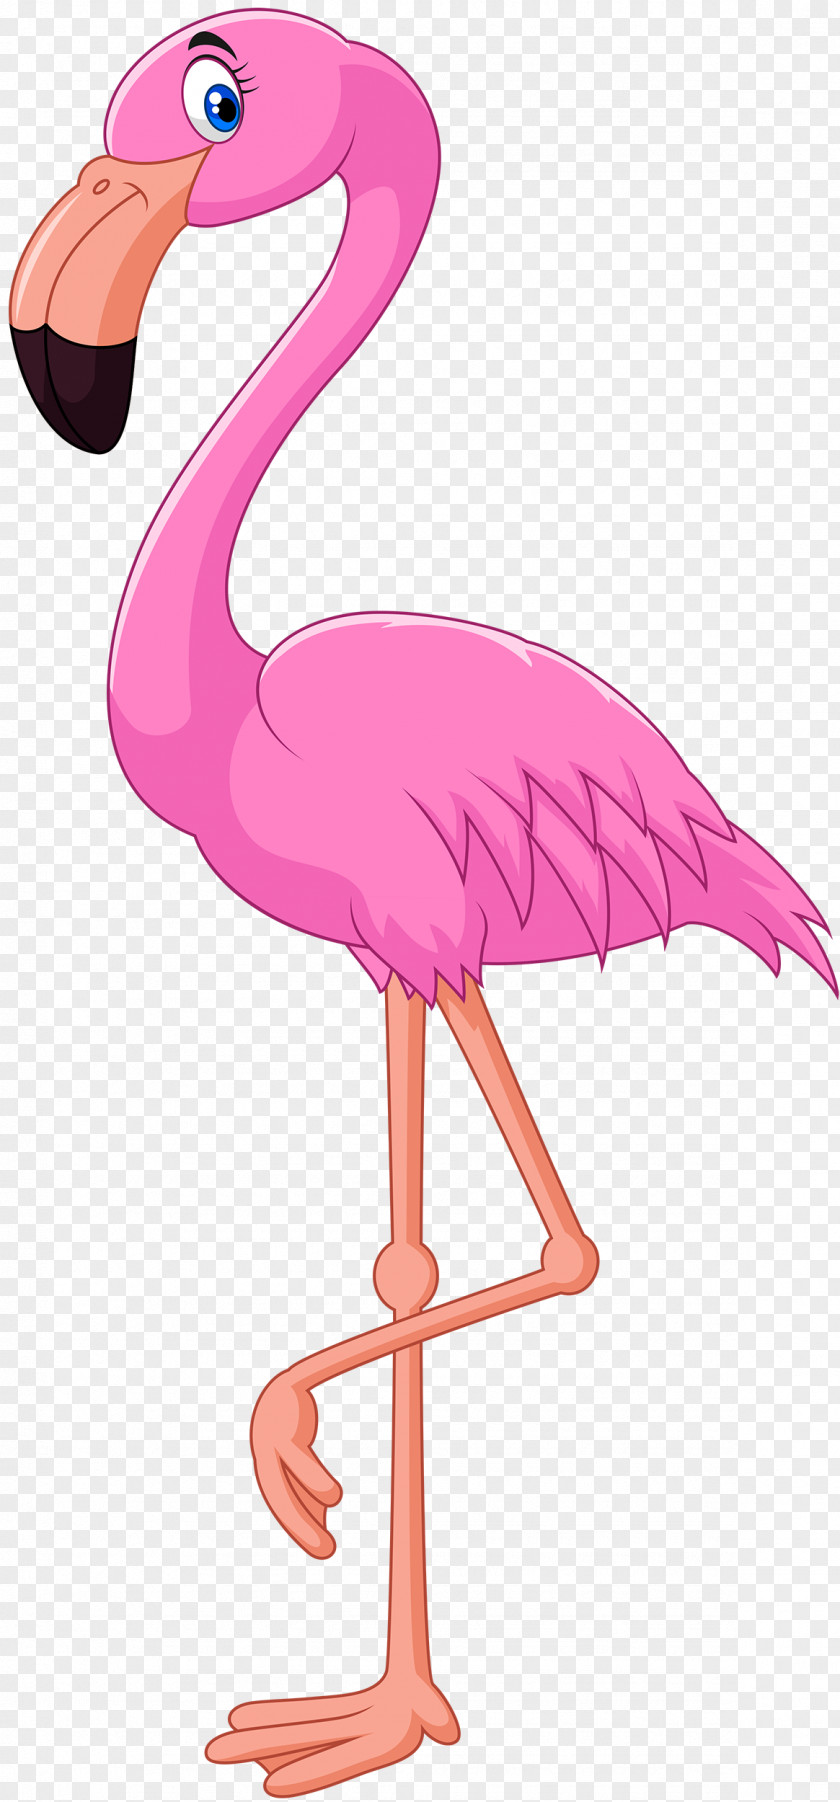 Flamingo Cartoon Bird Illustration PNG